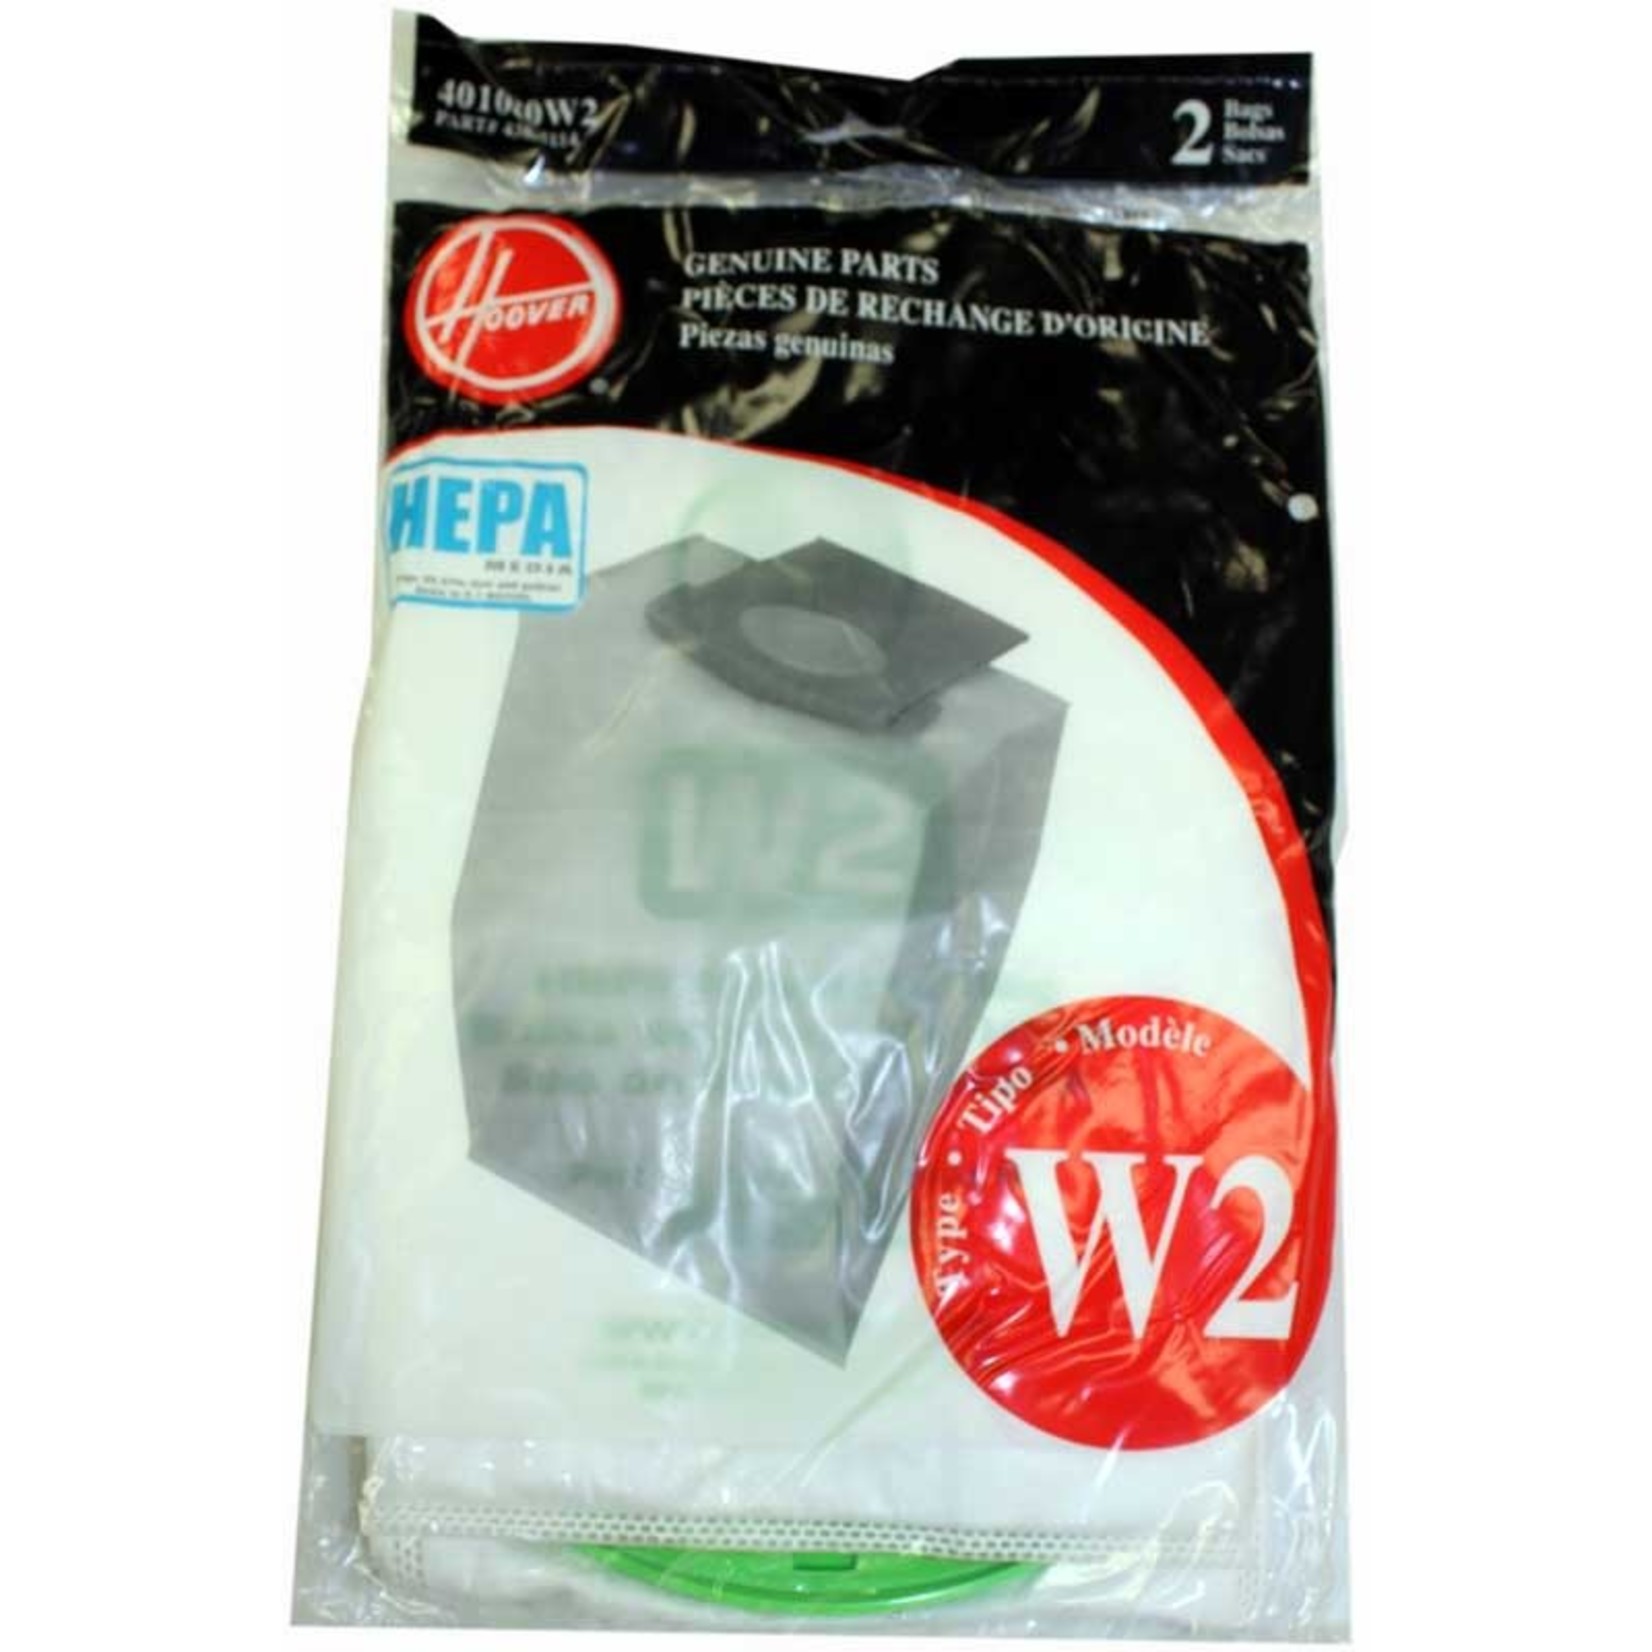 Hoover Hoover Style "W2" HEPA Cloth Bag - 2pk